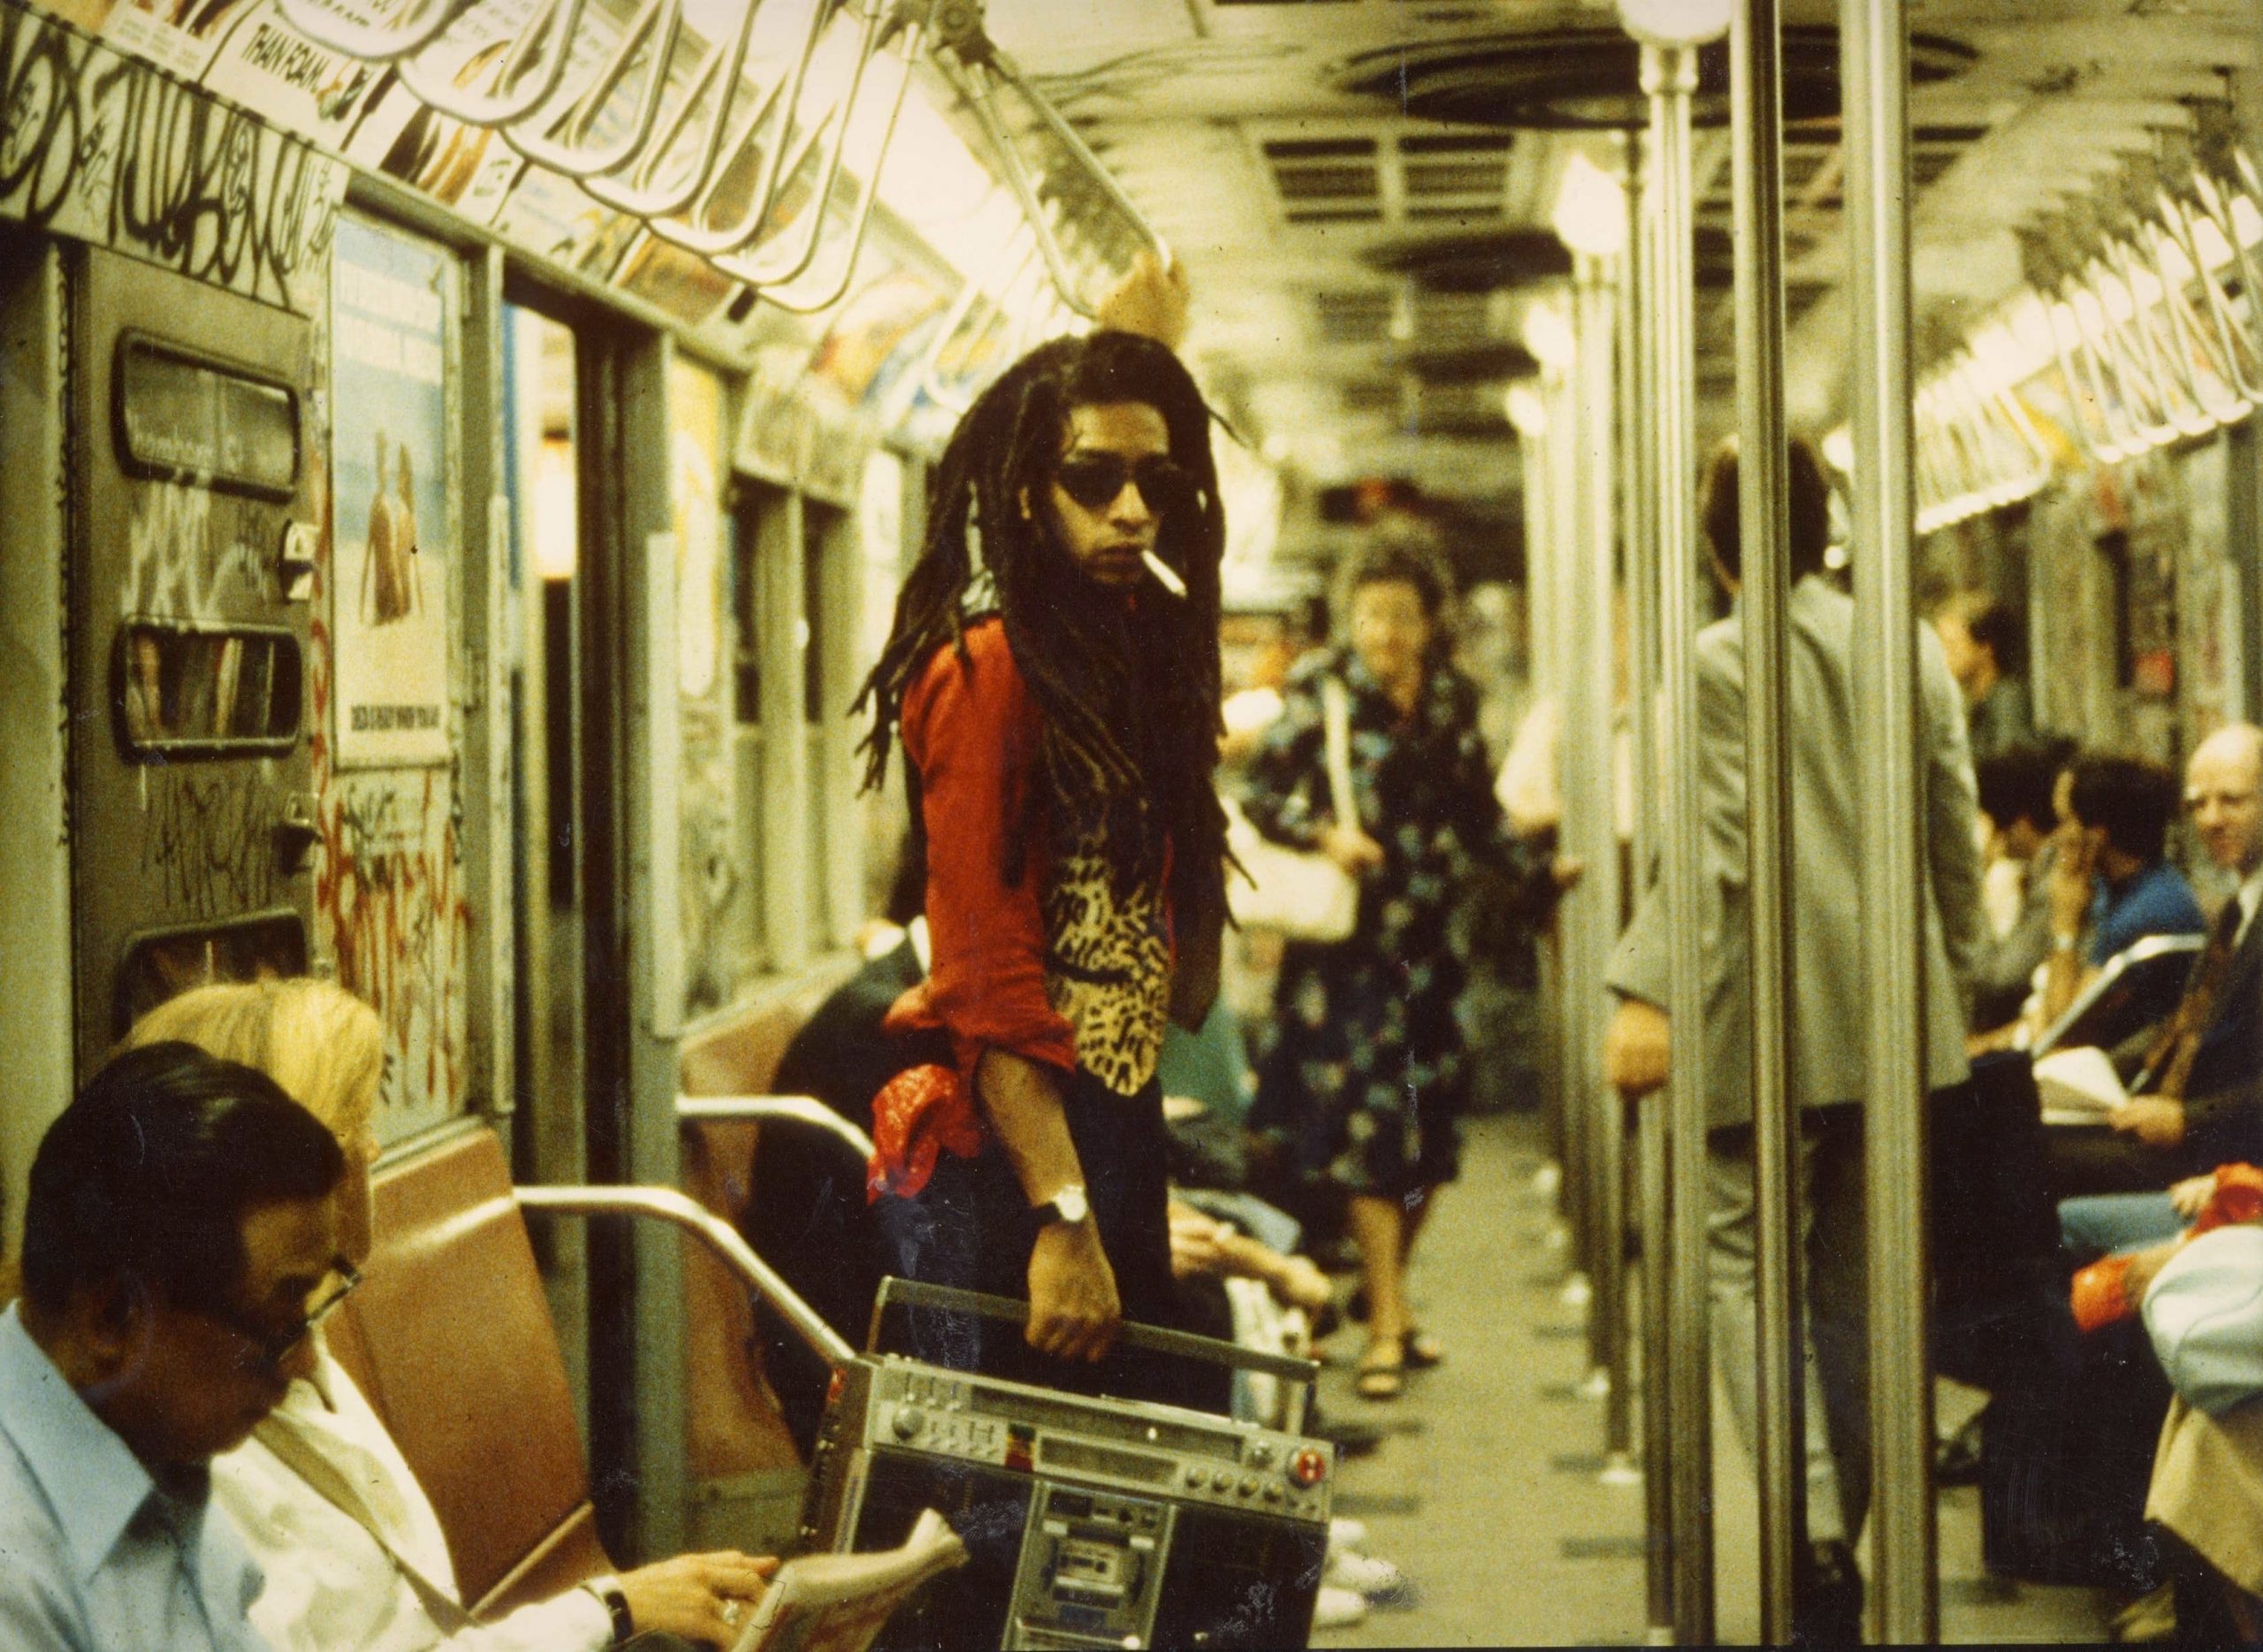 Don-Letts-on-the-New-York-subway-1981.-CREDIT-LISA-JONES-scaled.jpg